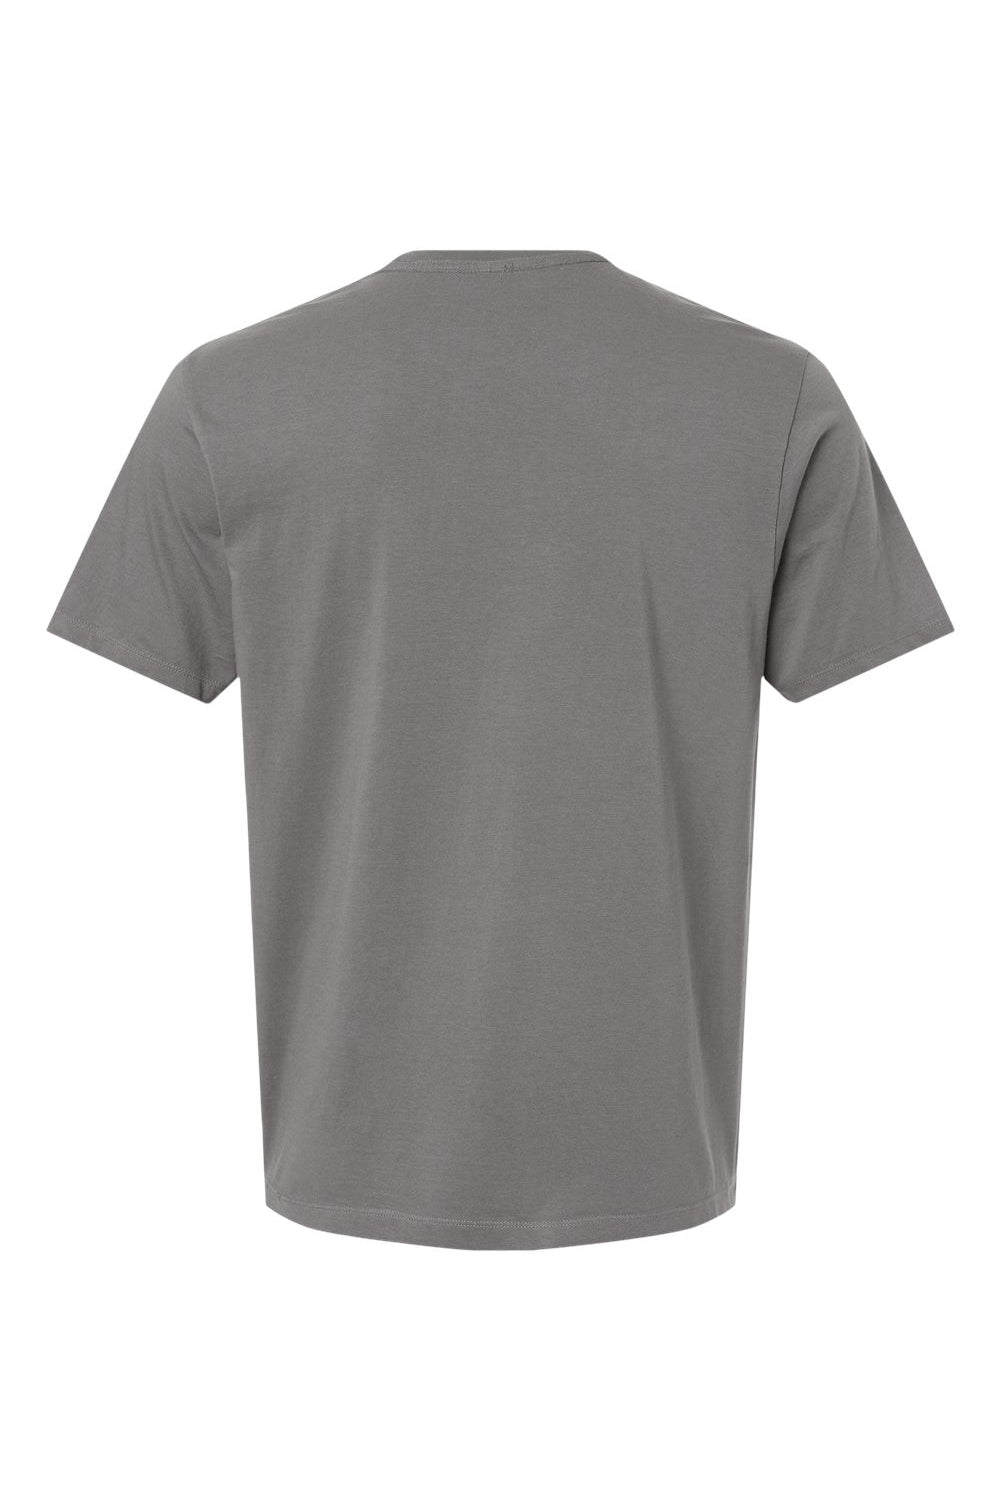 SoftShirts 400 Mens Organic Short Sleeve Crewneck T-Shirt Graphite Grey Flat Back